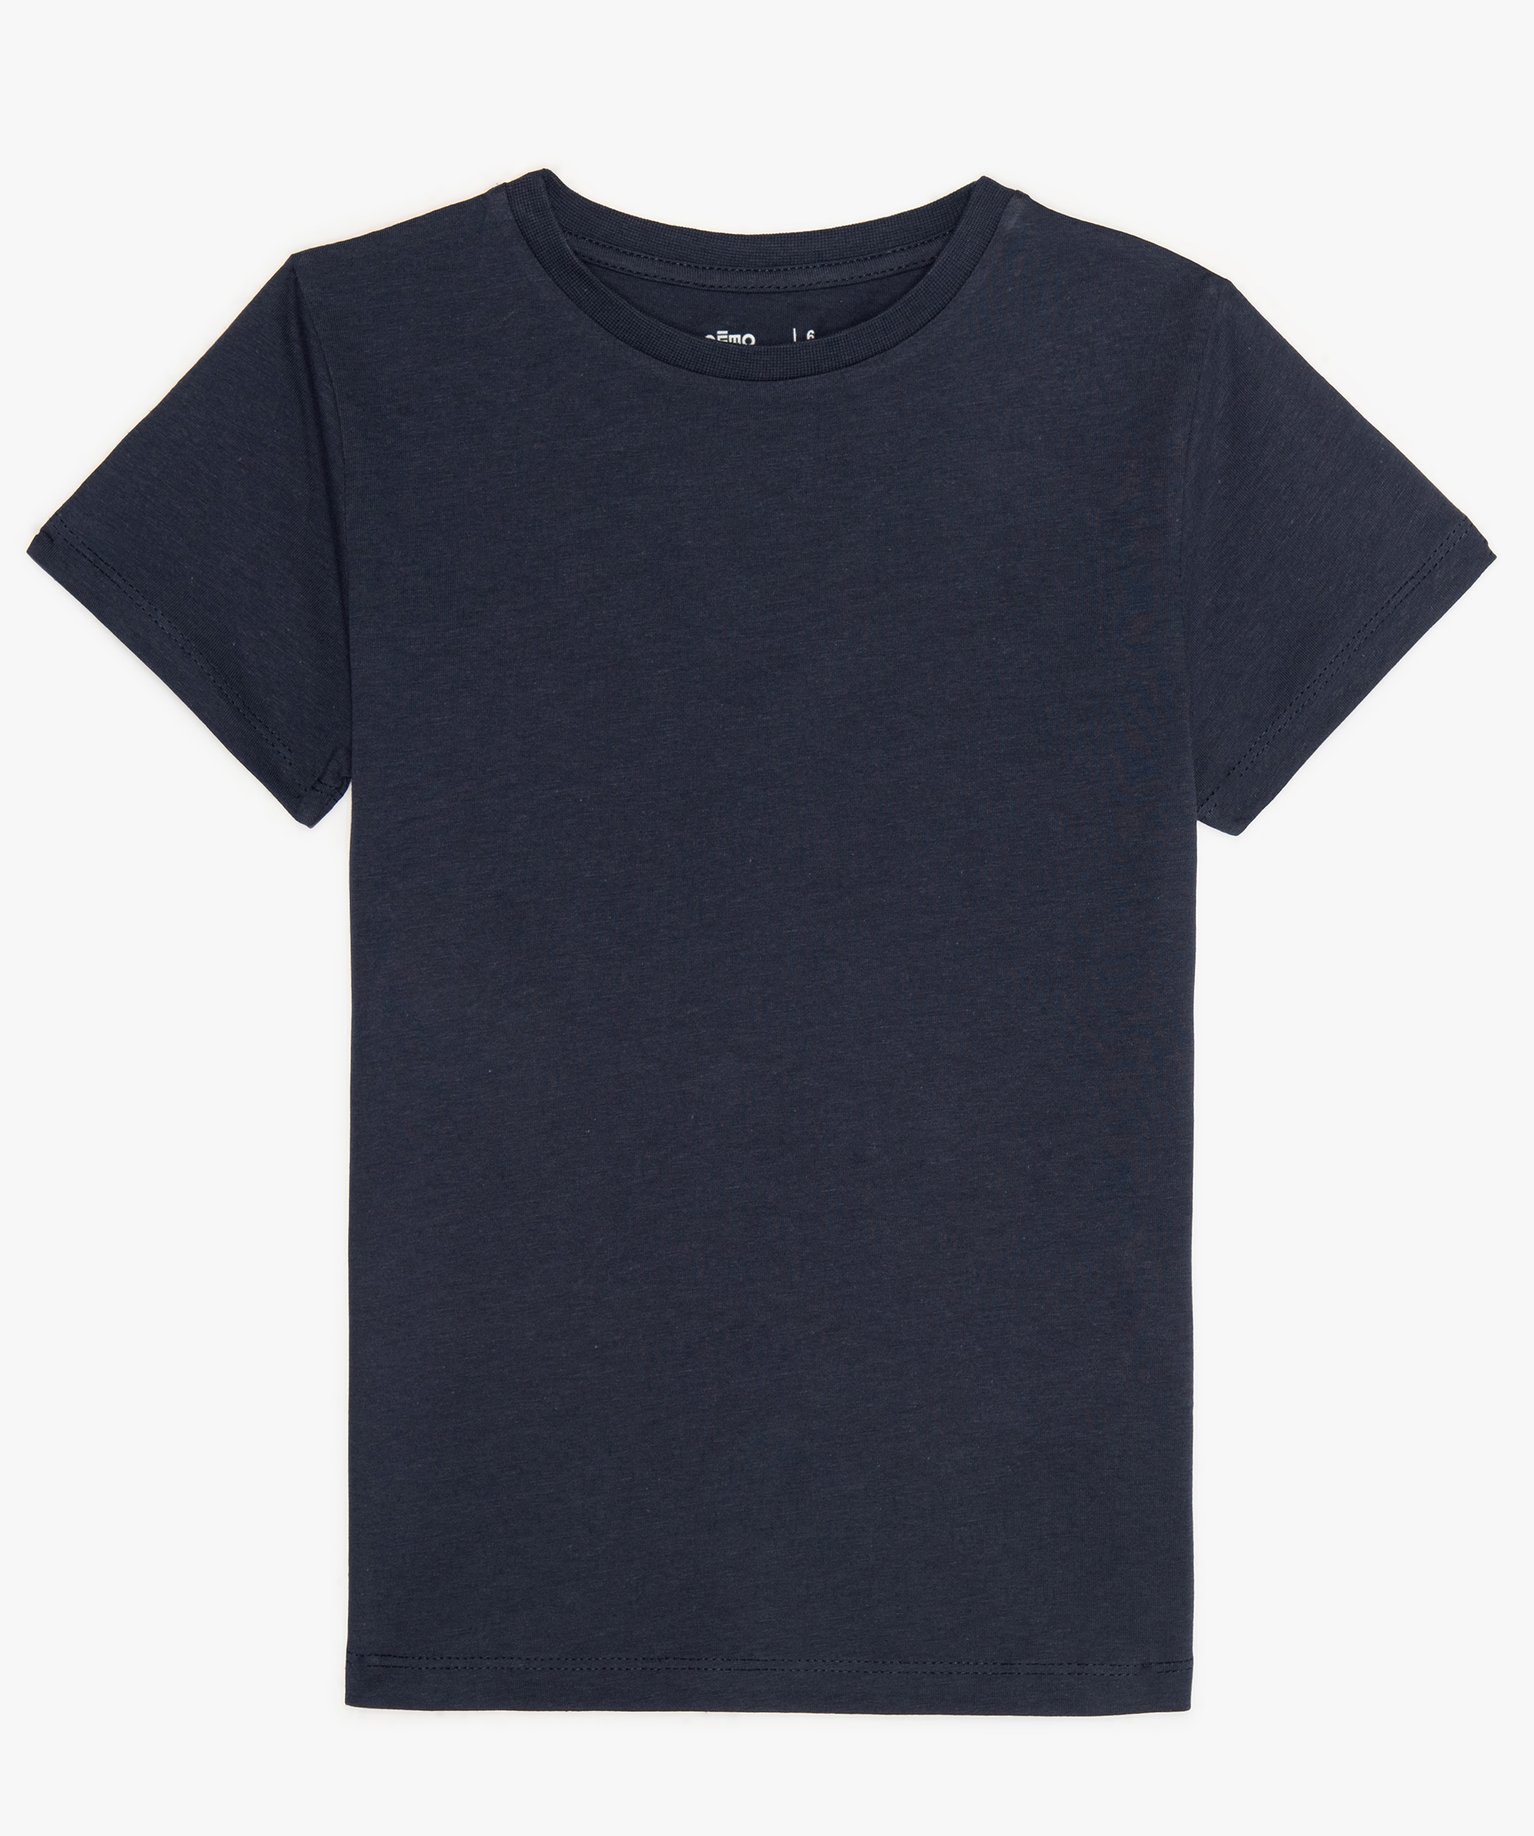 Gemo vetements tee-shirt garcon uni a manches courtes bleu garcon | GÉMO